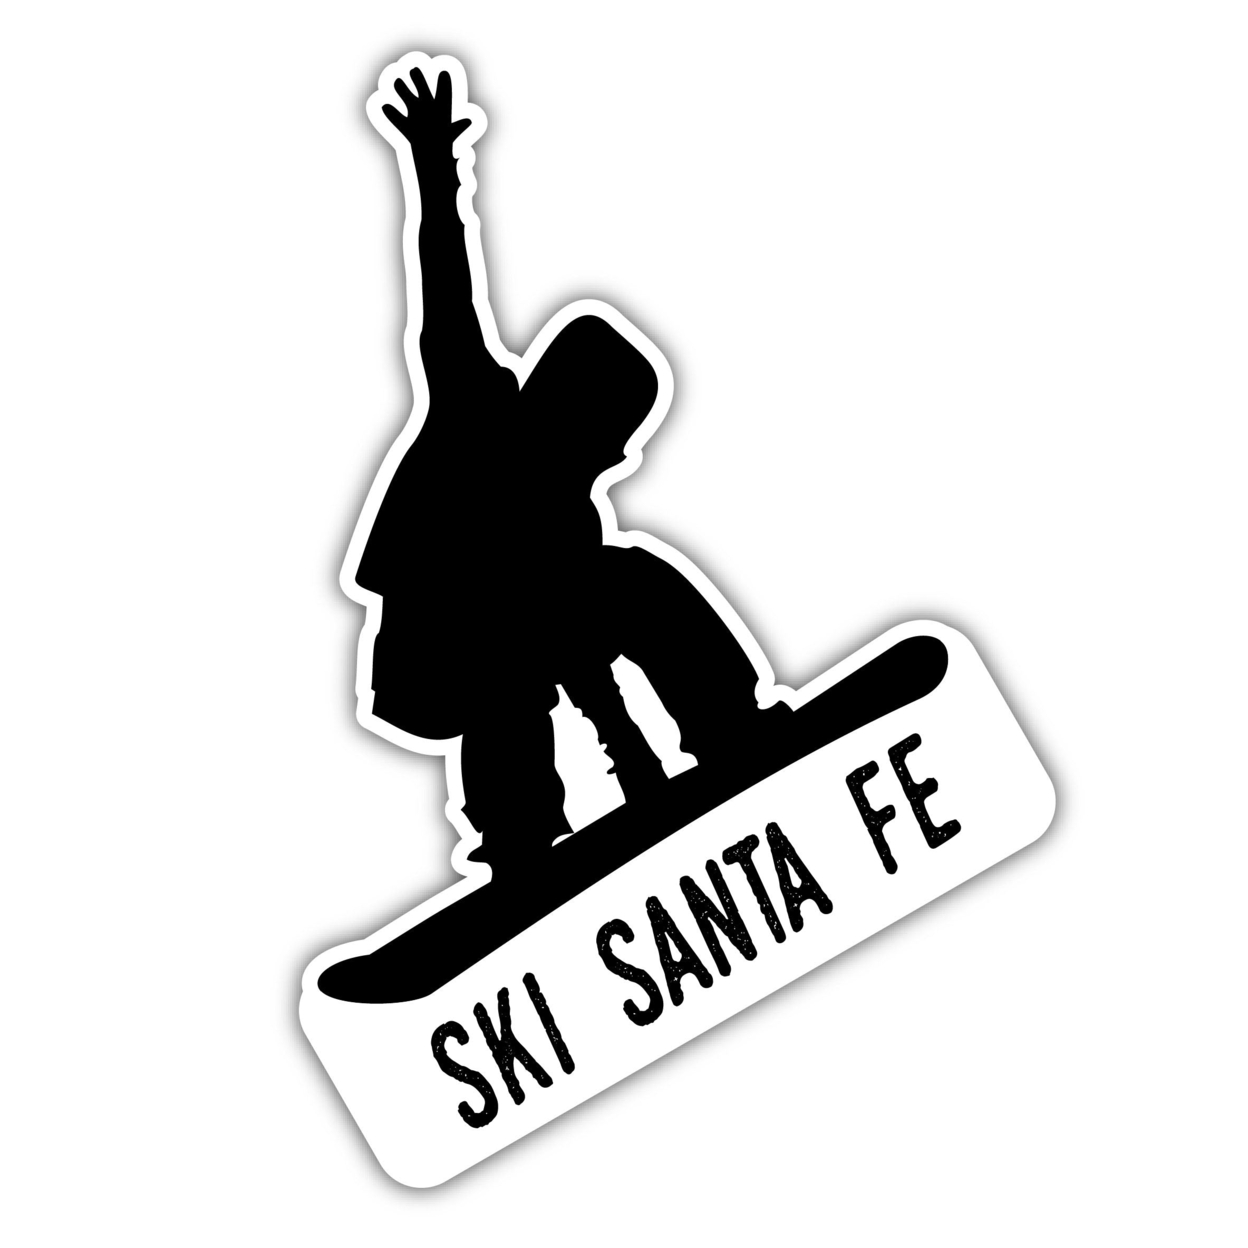 Ski Santa Fe New Mexico Ski Adventures Souvenir 4 Inch Vinyl Decal Sticker Mountain Design